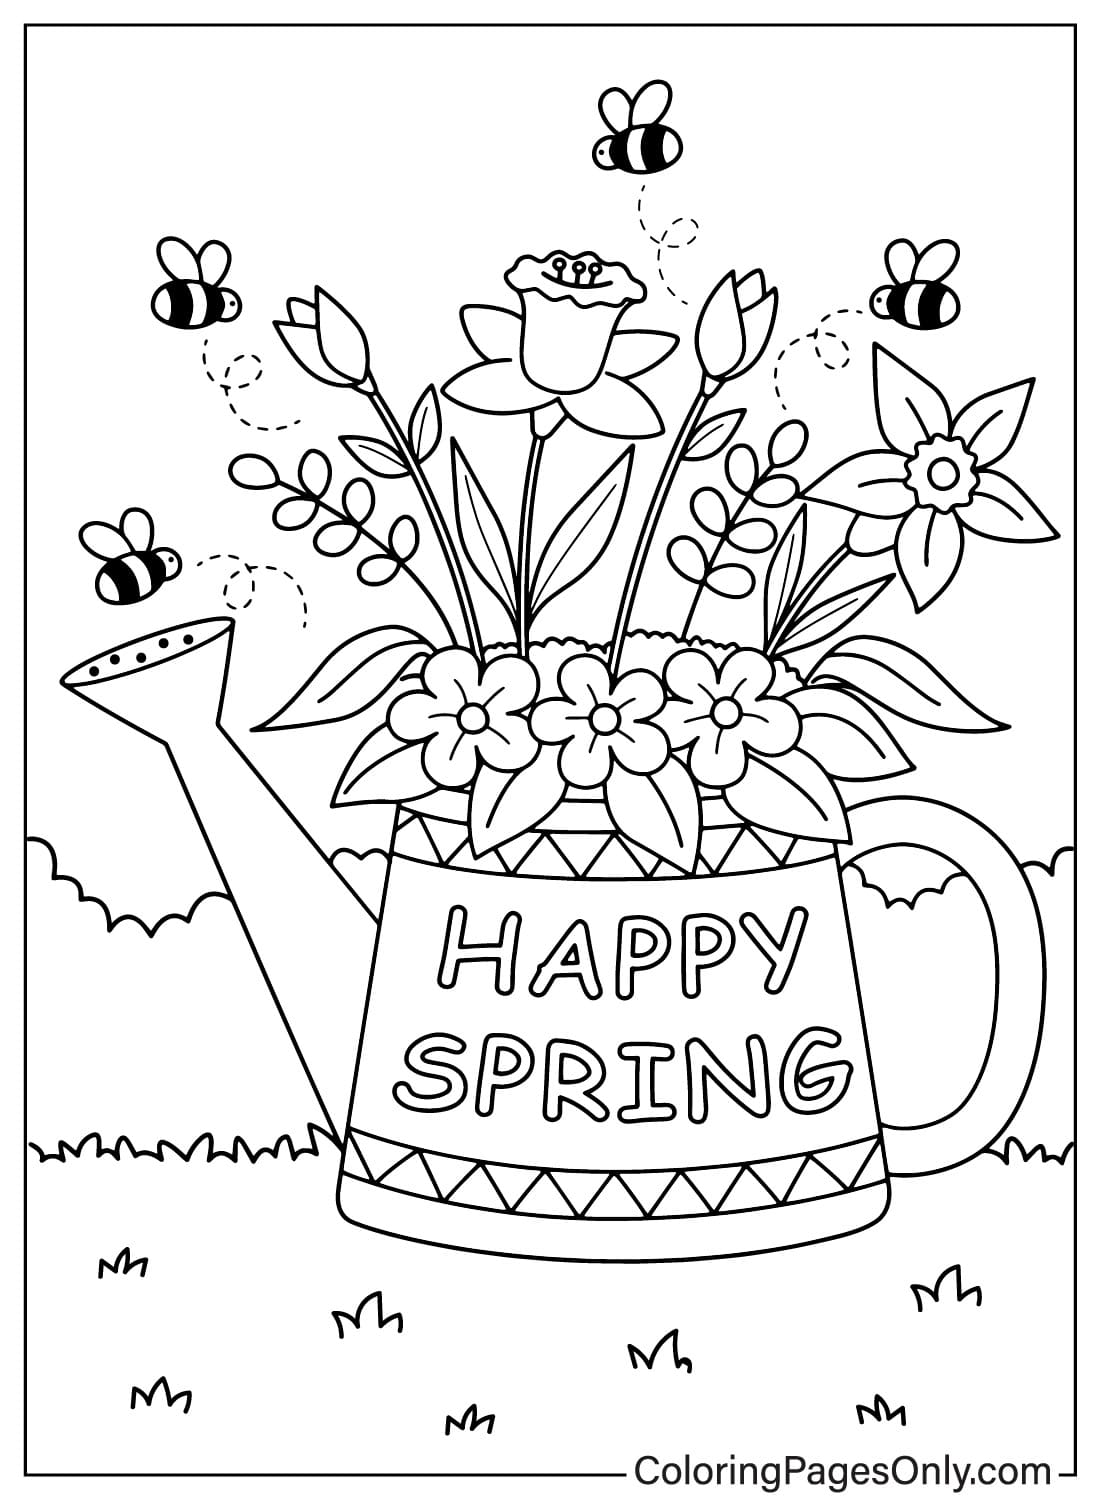 Imagens coloridas da página Primavera da Primavera